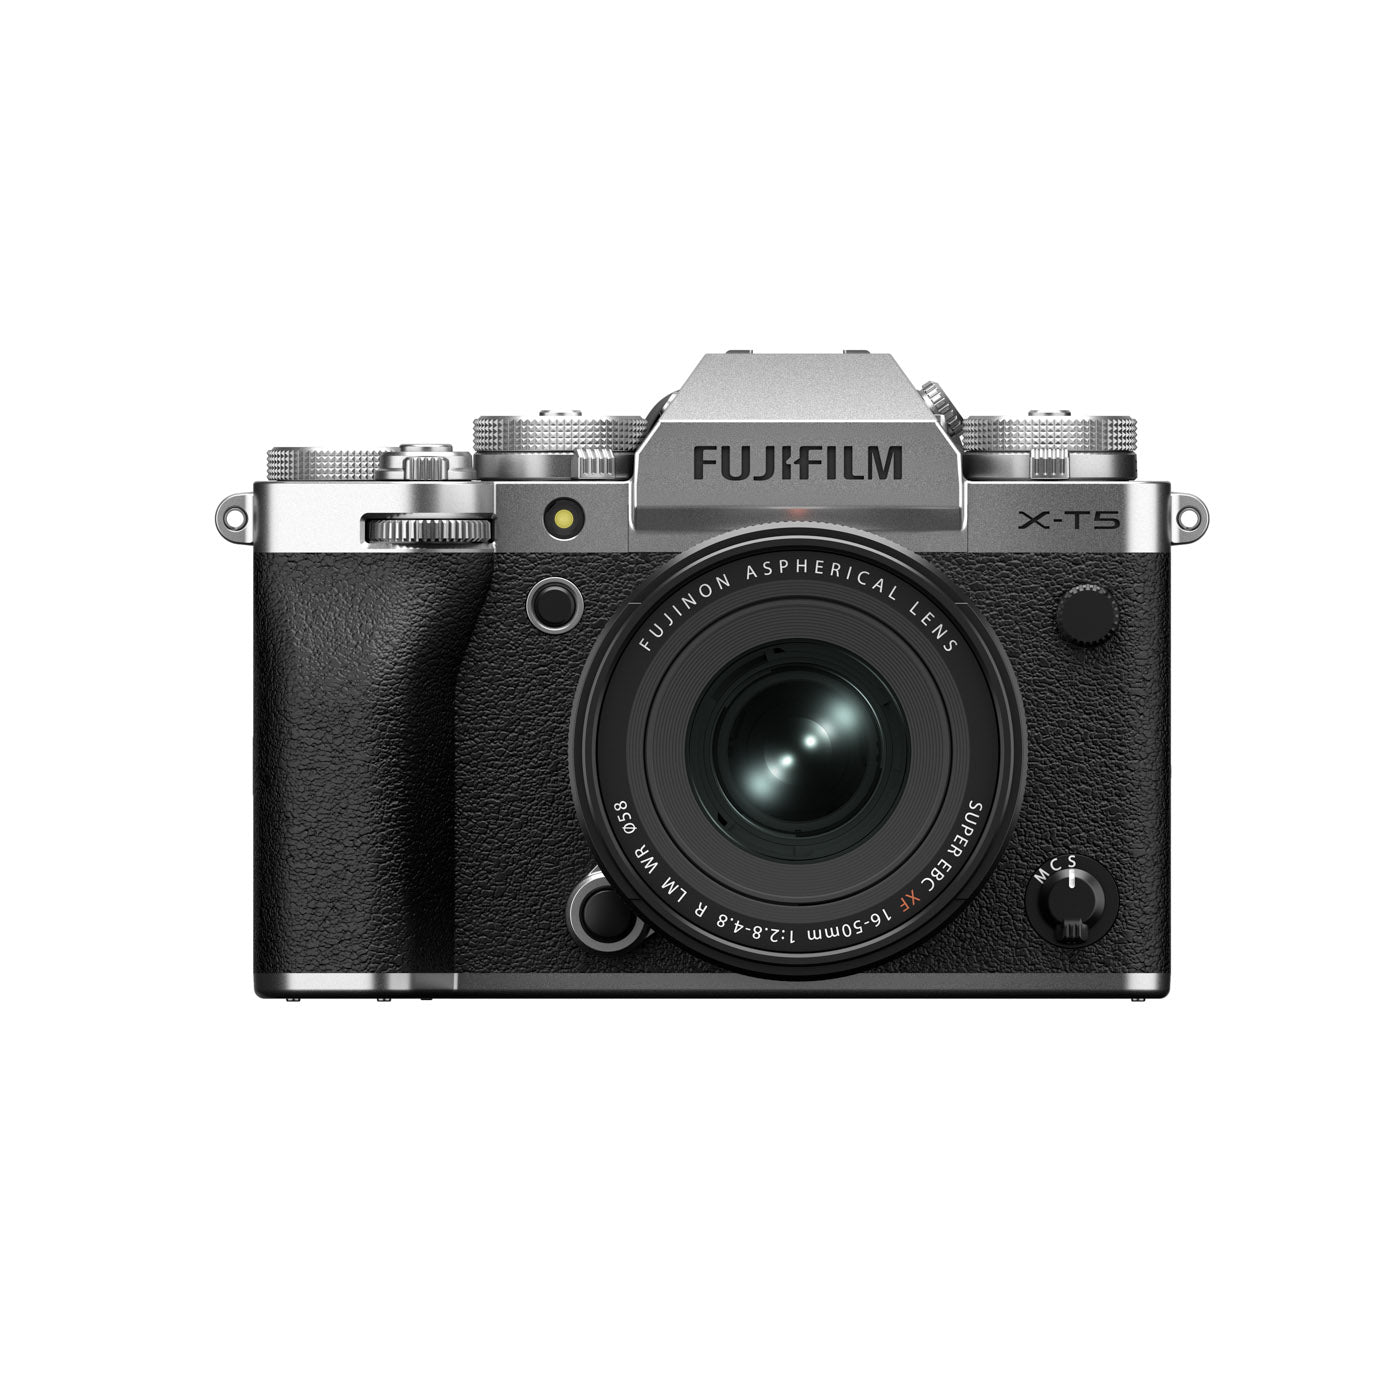 Fujifilm X-T5 Kit with XF 16-50mm Lens - Silver